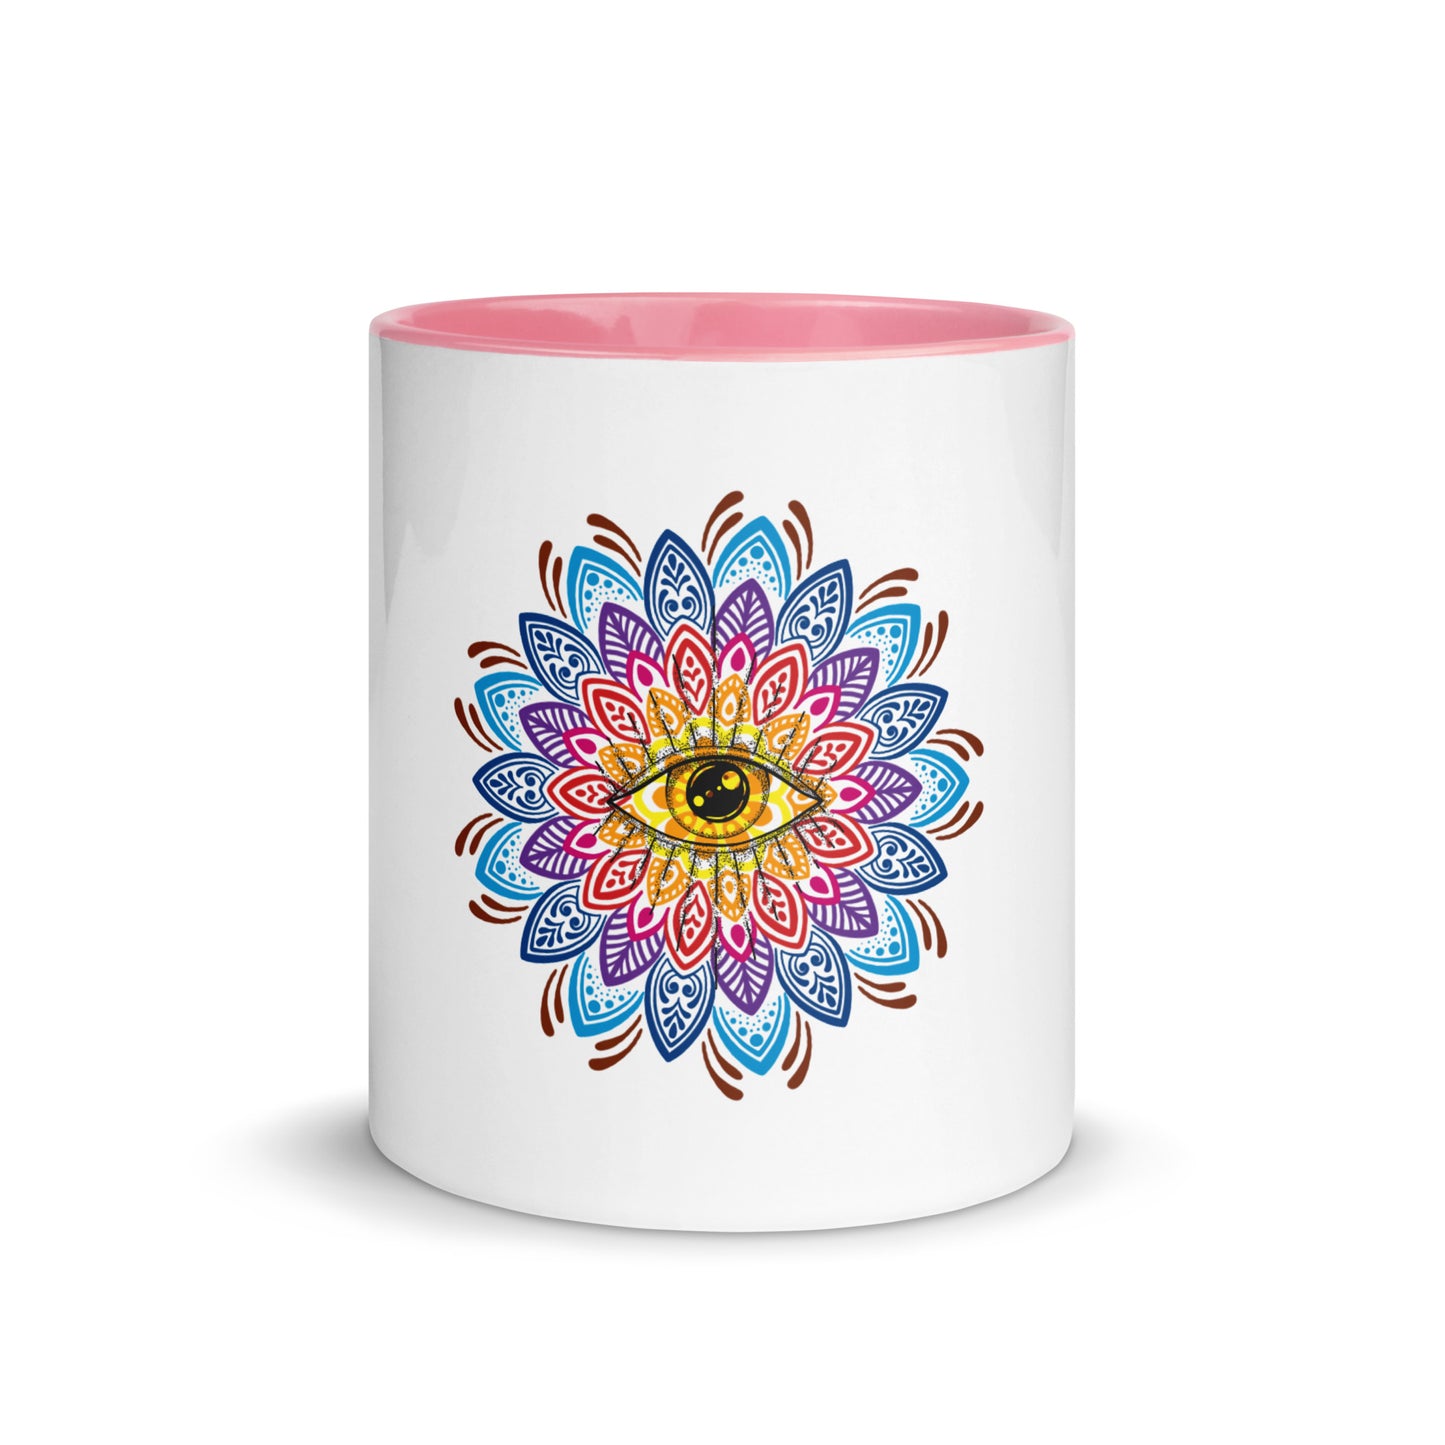 Beautiful Third Eye Mug With Colour Inside